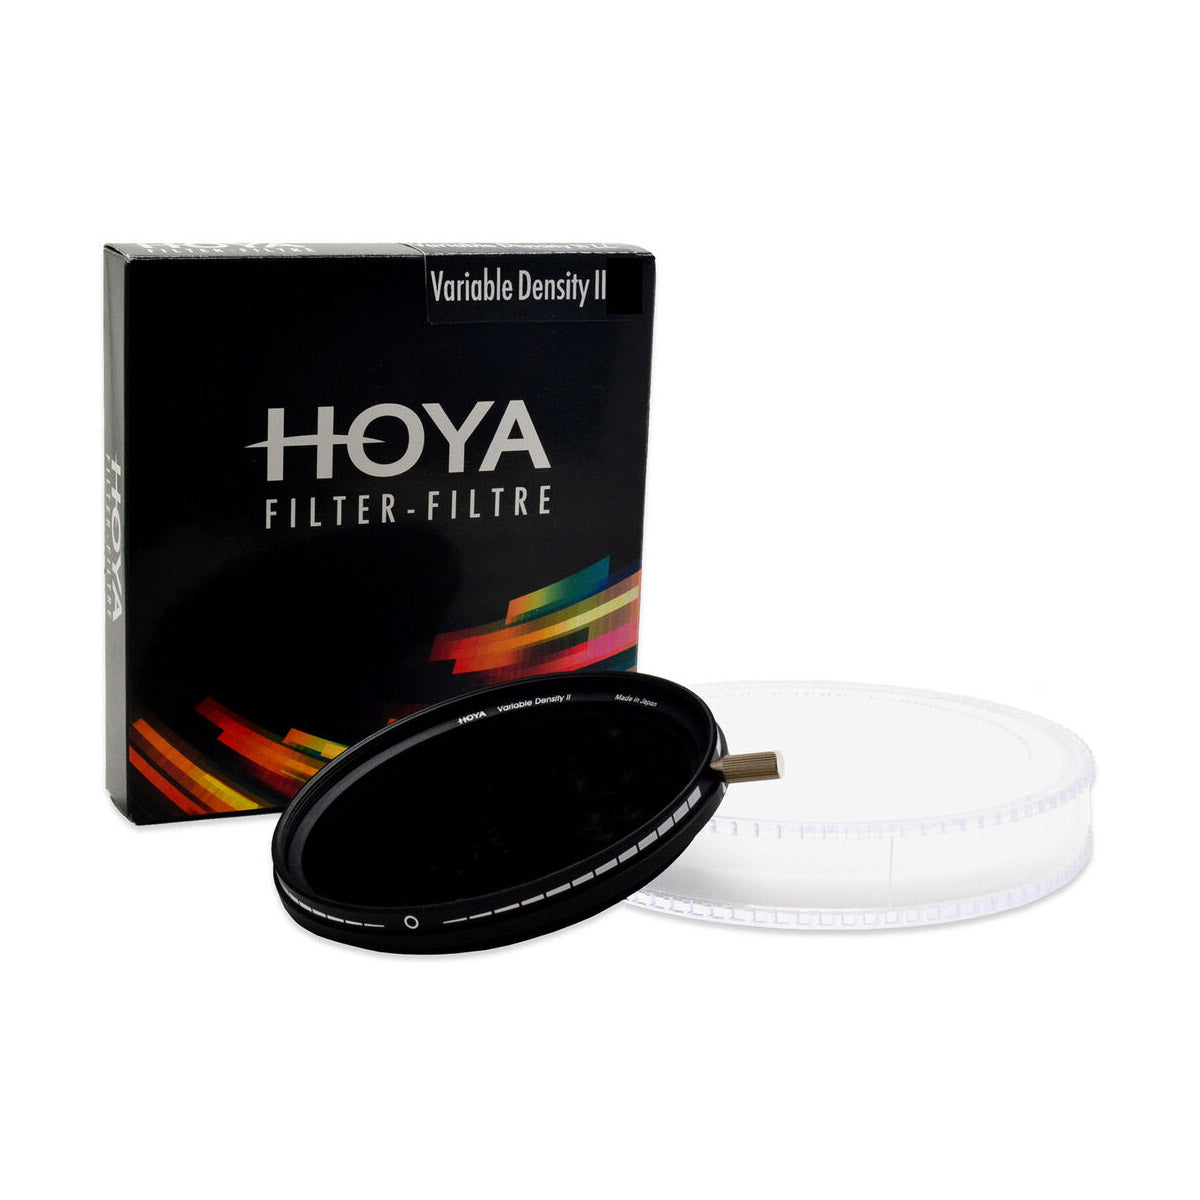 Hoya 82mm Variable Density II ND Filter